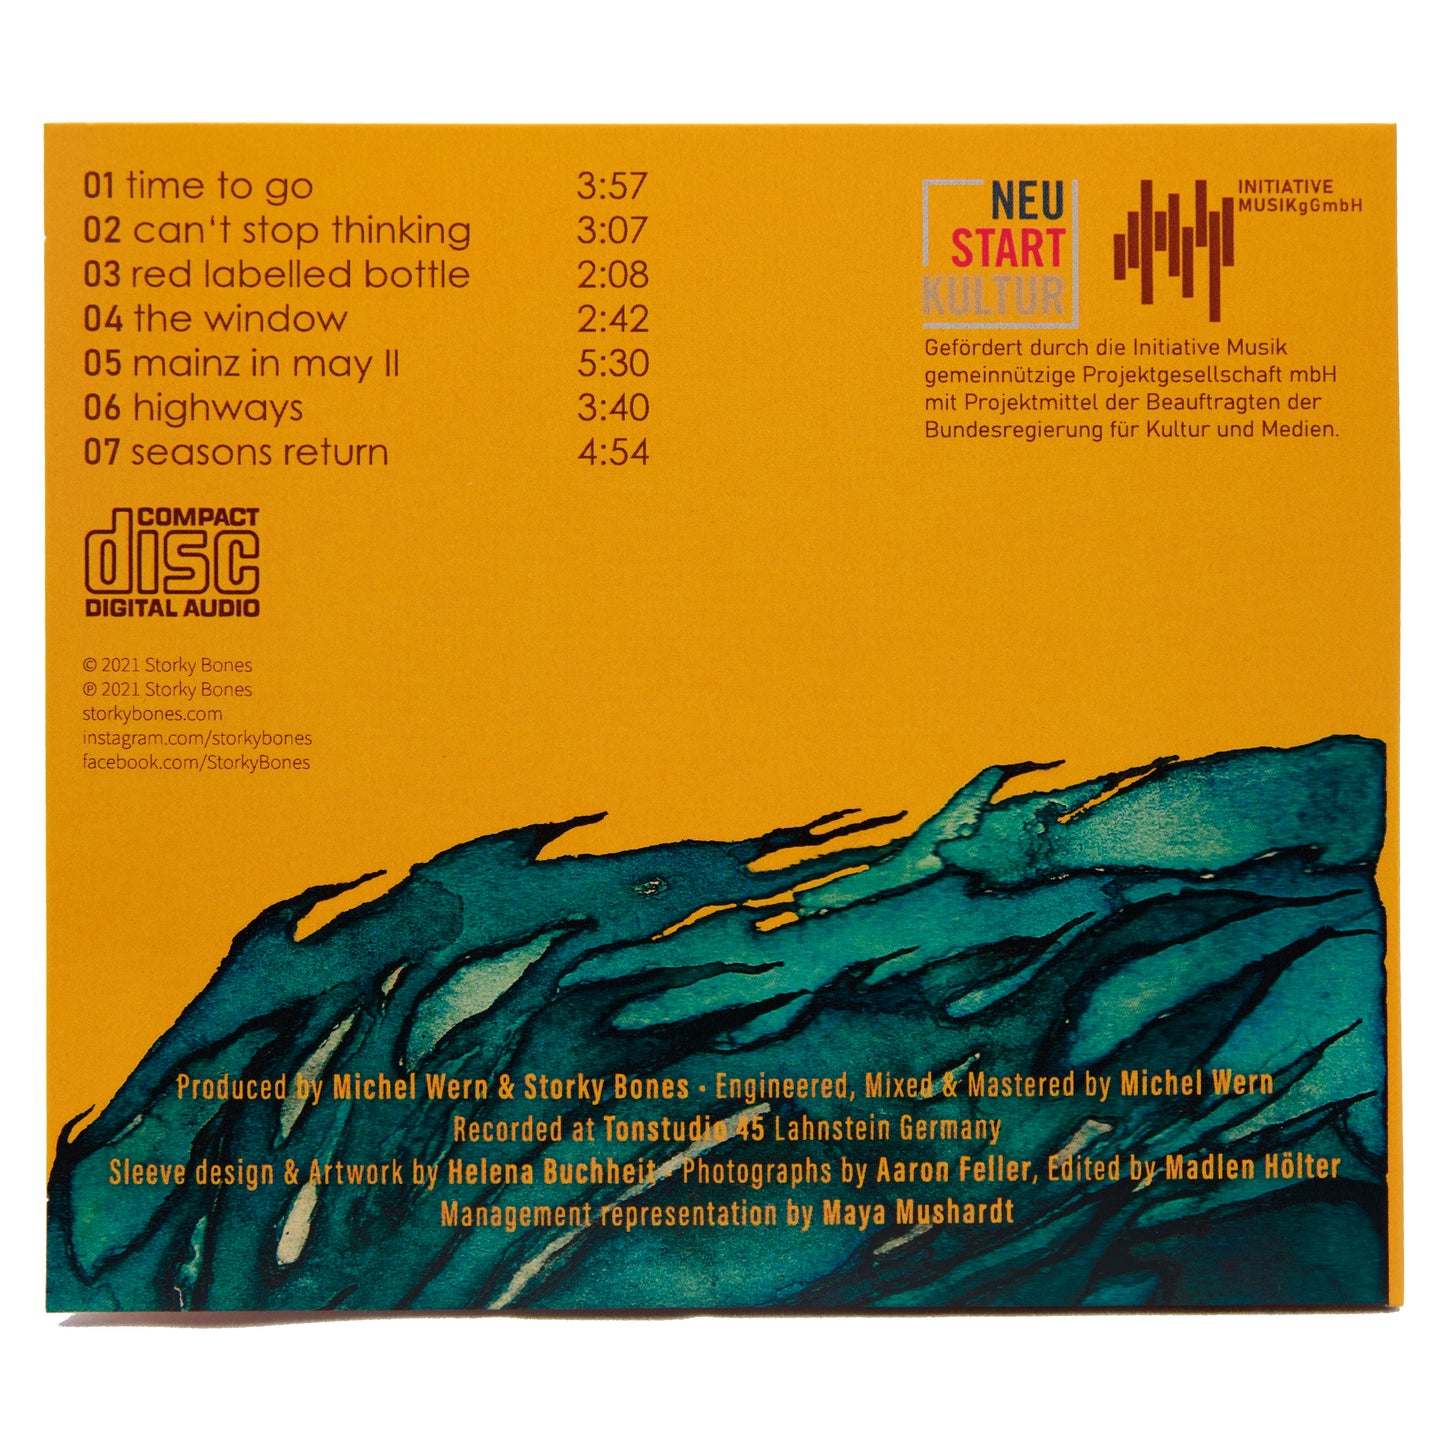 Storky Bones Album CD "IV - III"